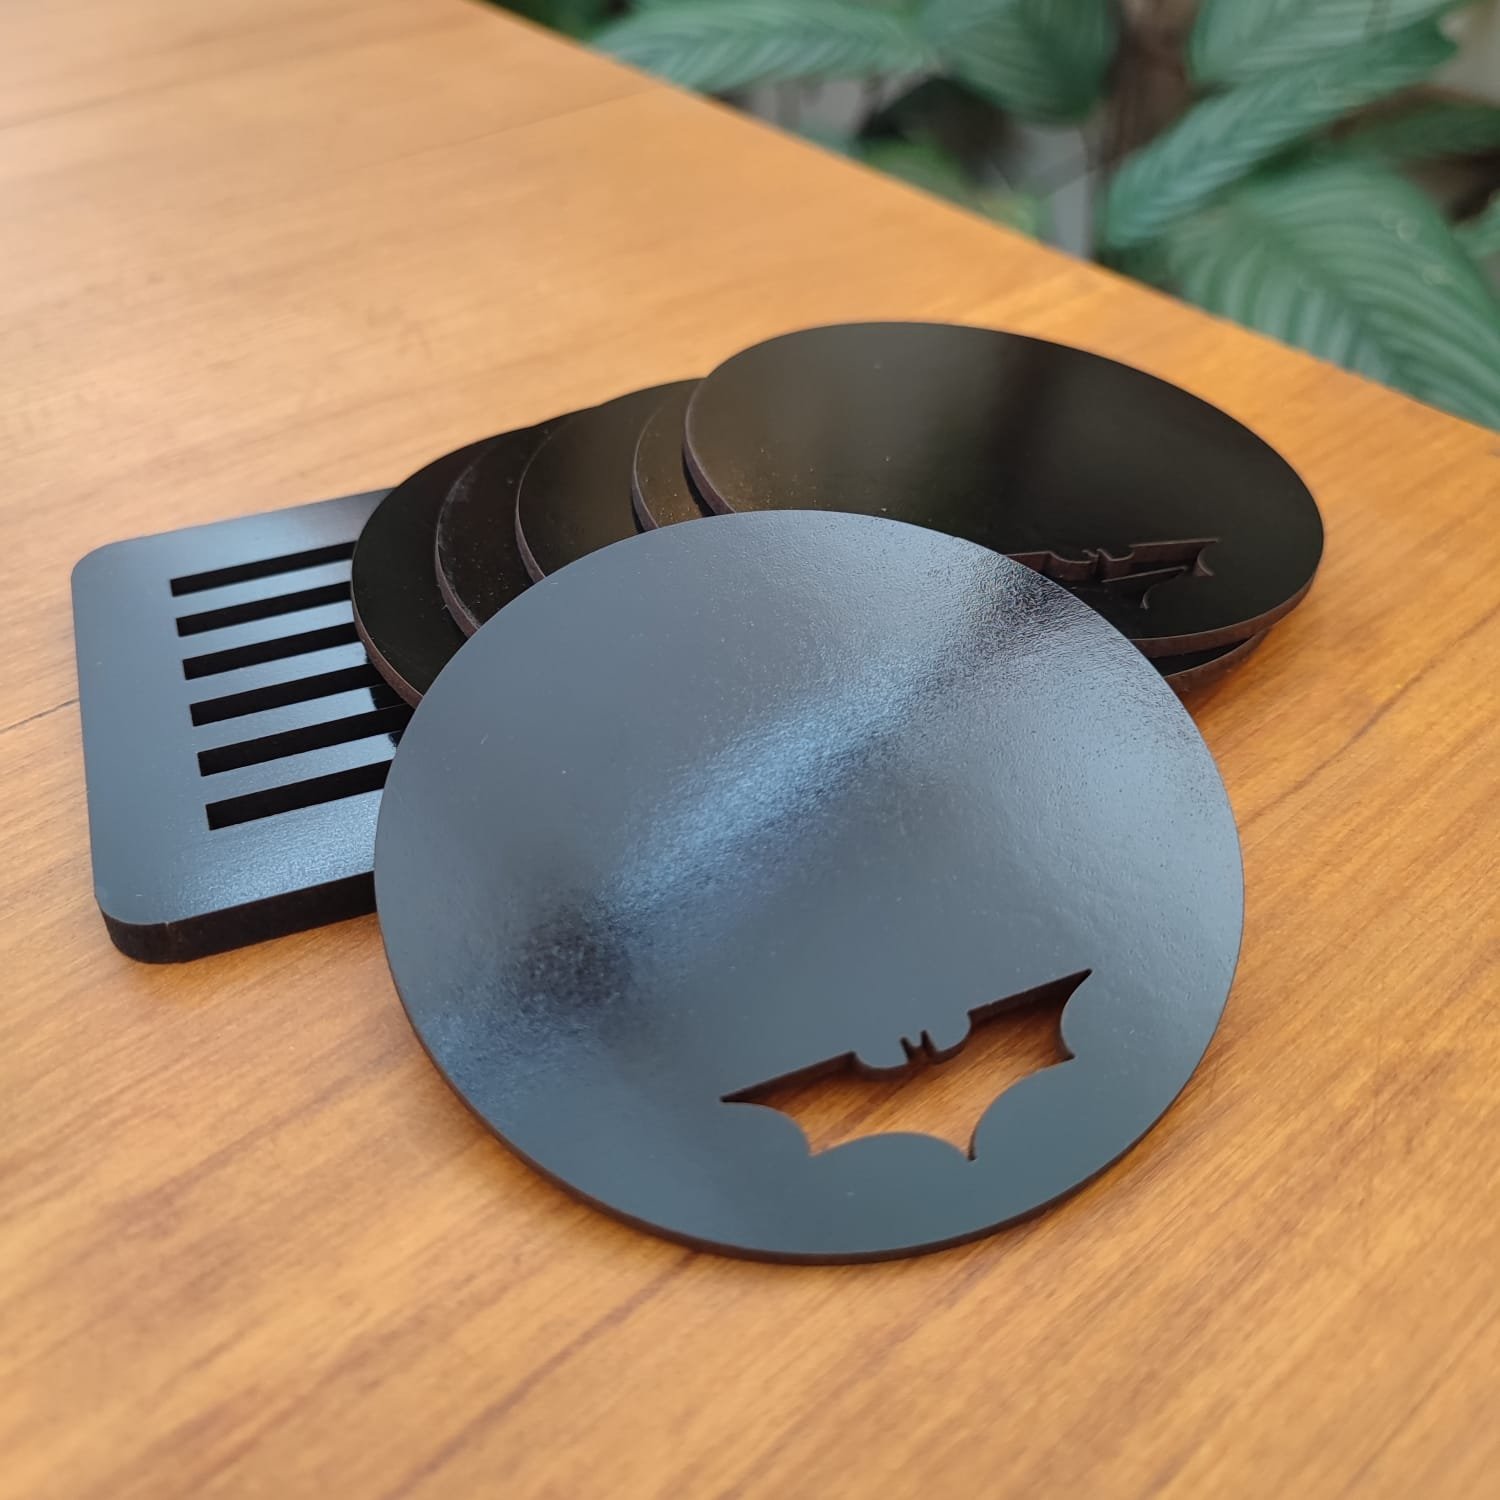 Kit Porta Copos do Morcego - Batman - em Mdf Corte a Laser